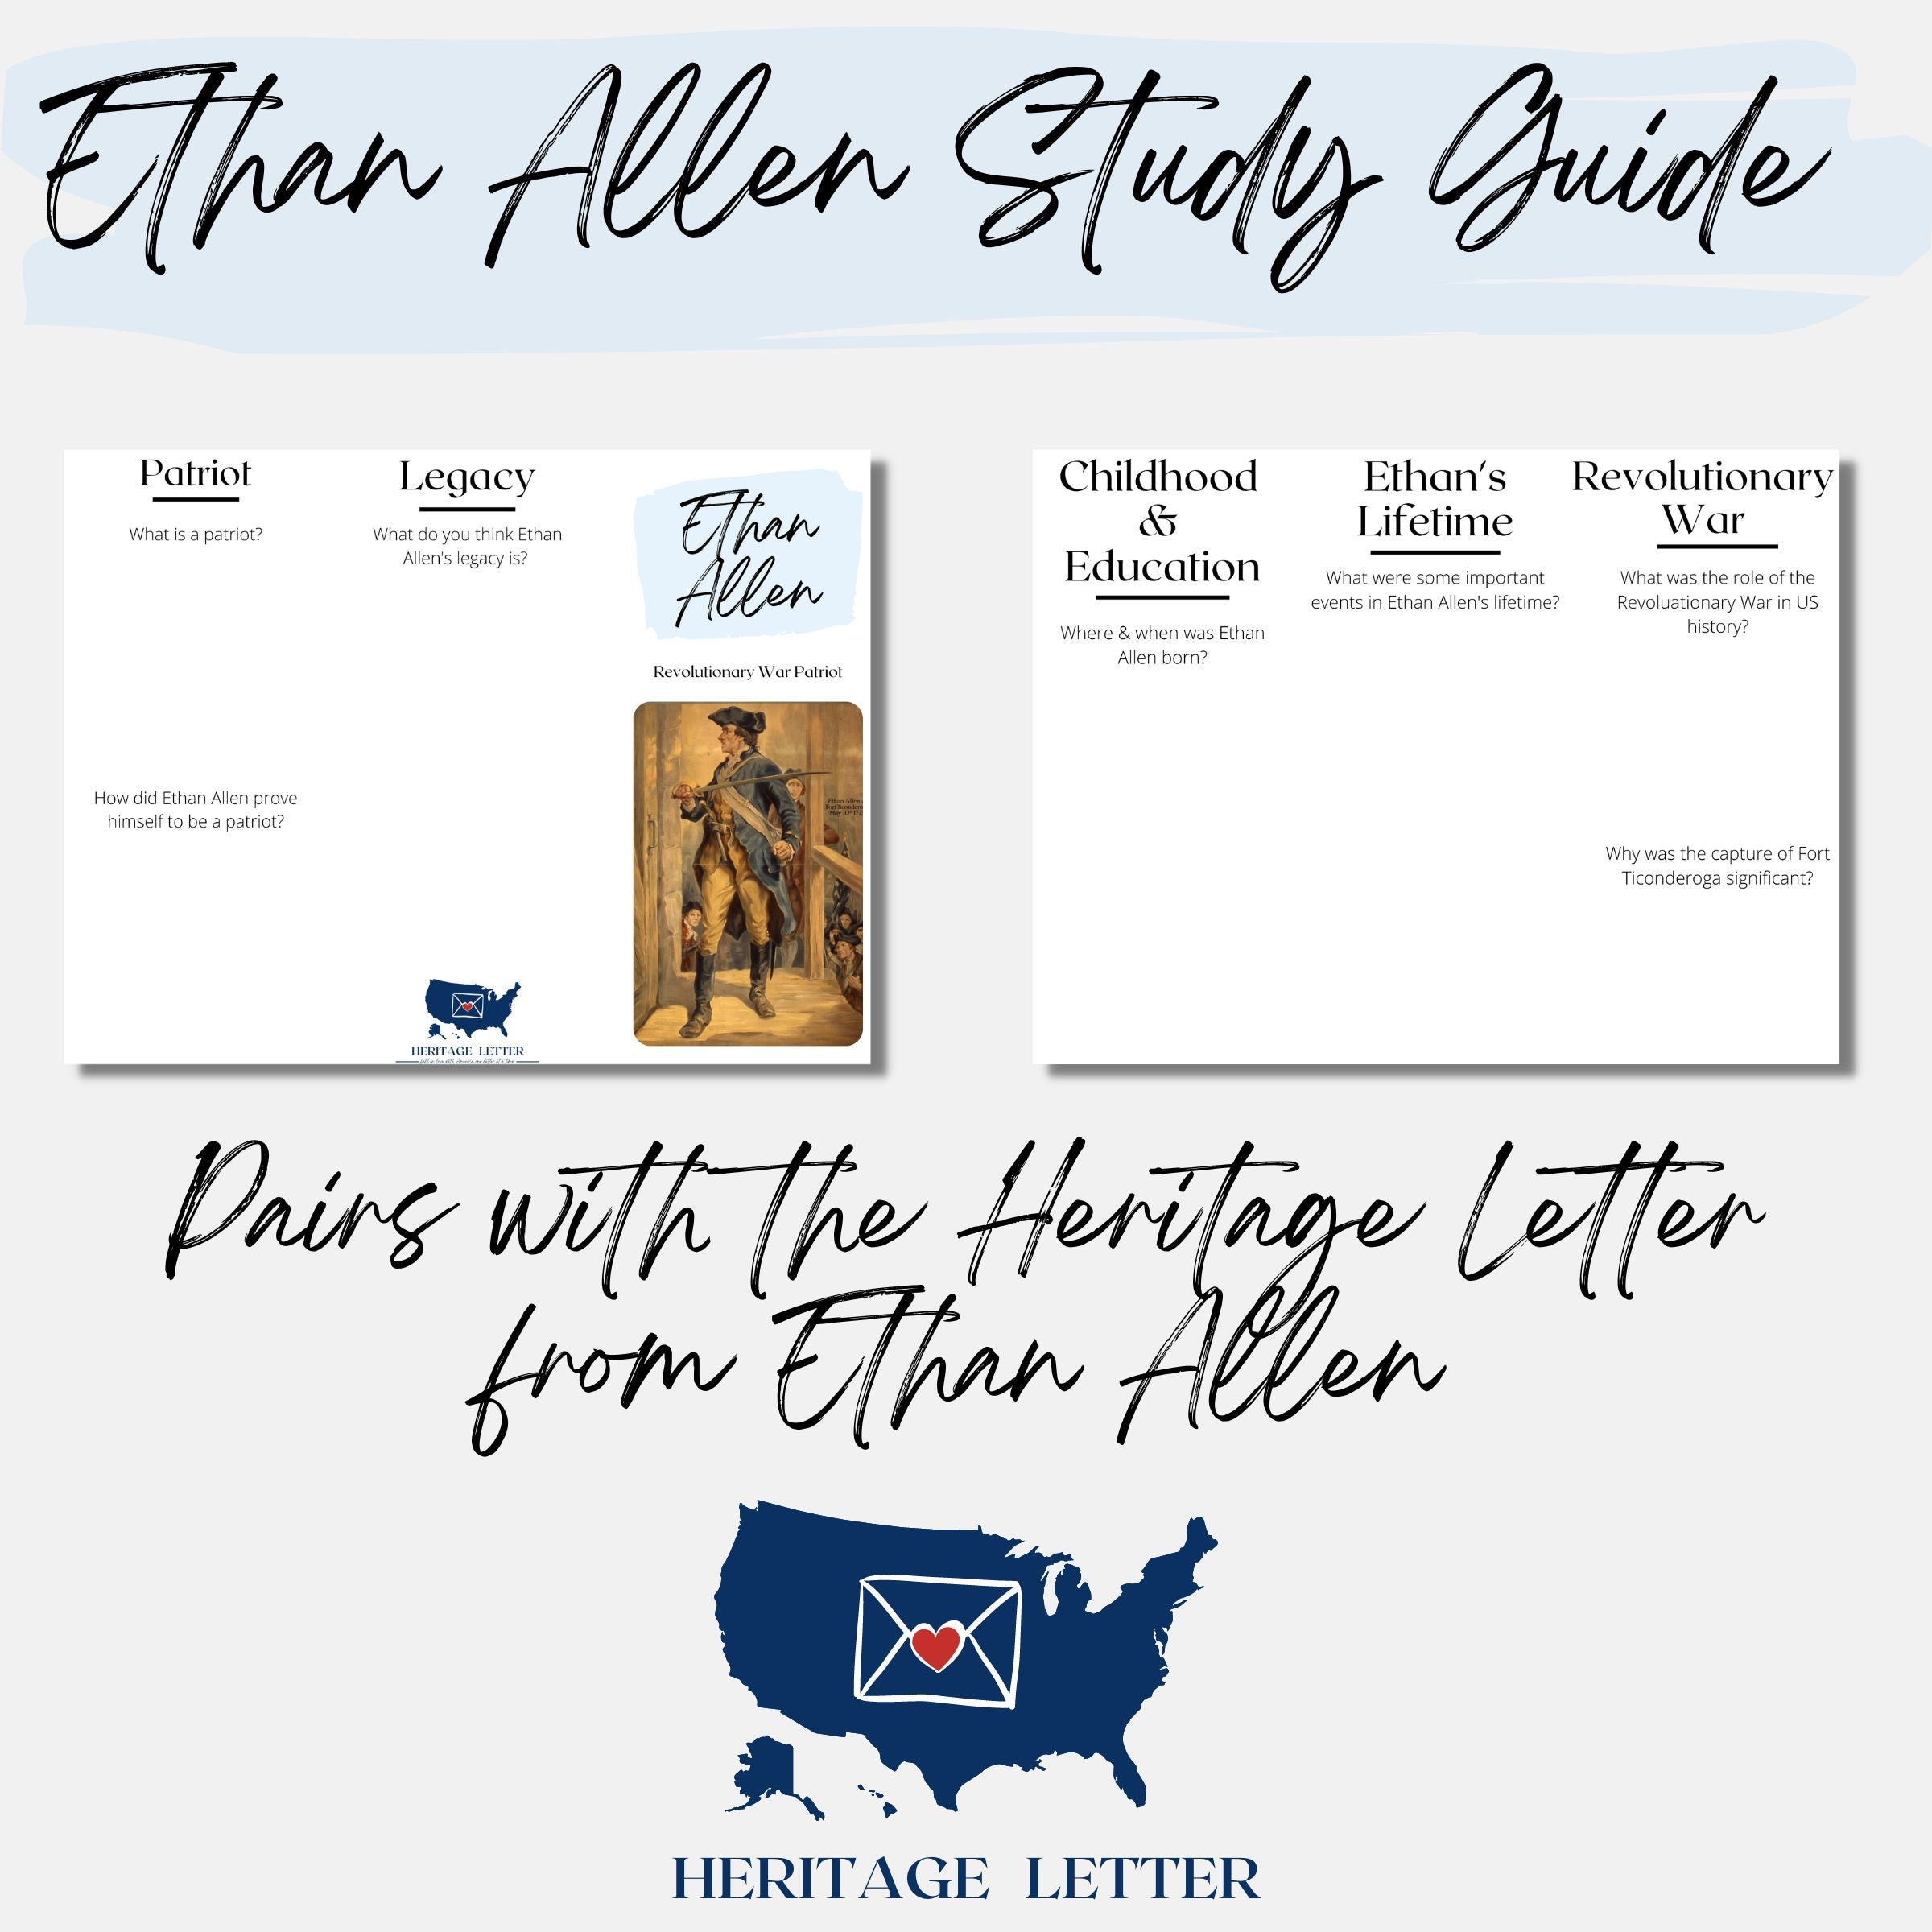 Ethan Allen Study Guide